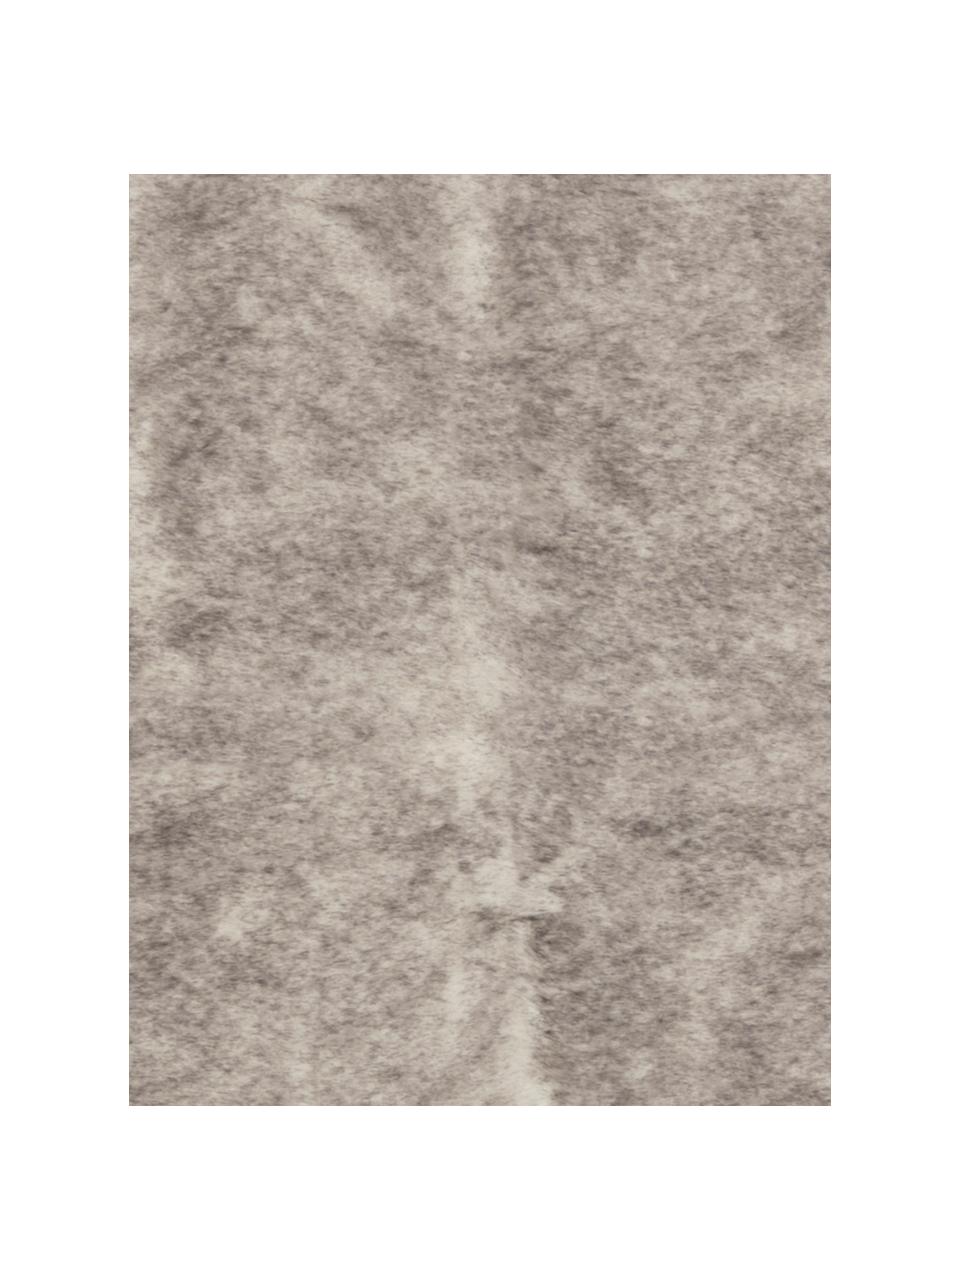 Flauschiger Hochflor-Teppich Superior aus Kunstfell, Flor: 95% Acryl, 5% Polyester, Creme,Beige,Weiss, B 180 x L 280 cm (Grösse M)